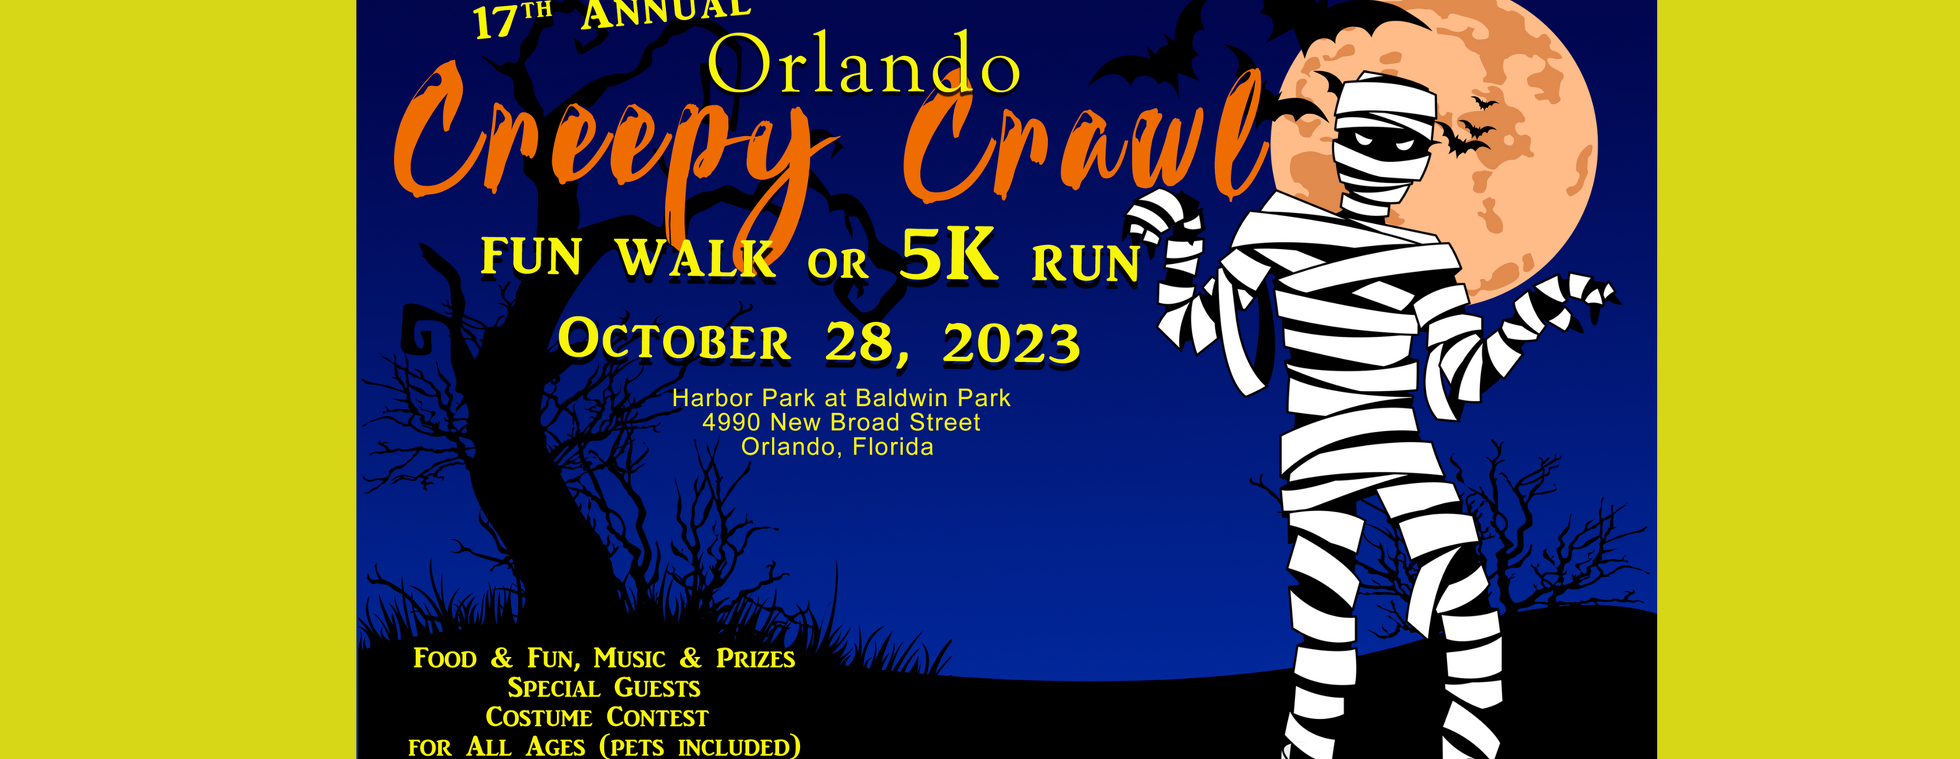 17th Annual Orlando Creepy Crawl -2023 